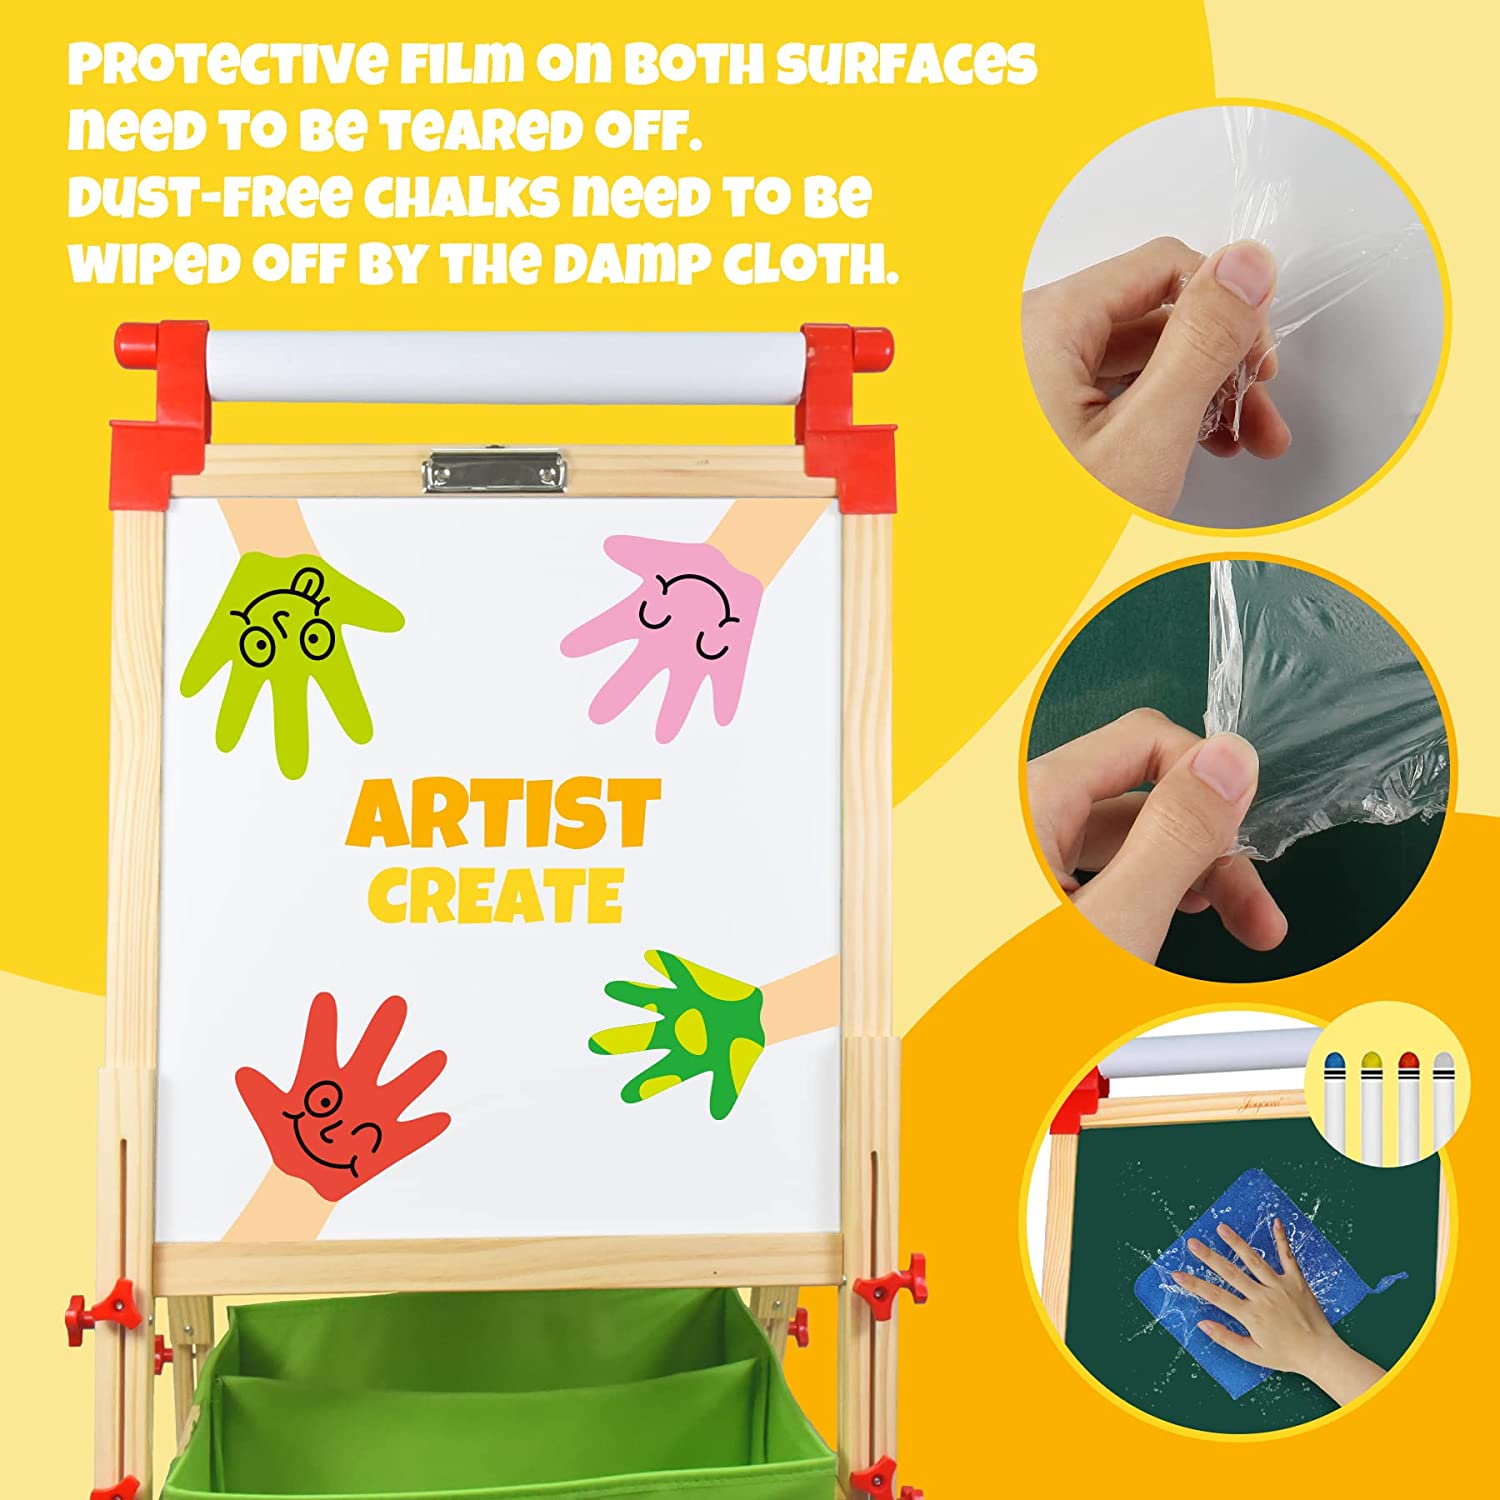 Joyooss Deluxe Art Easel for Kids with 2 Paper Rolls, 6 Finger Paints